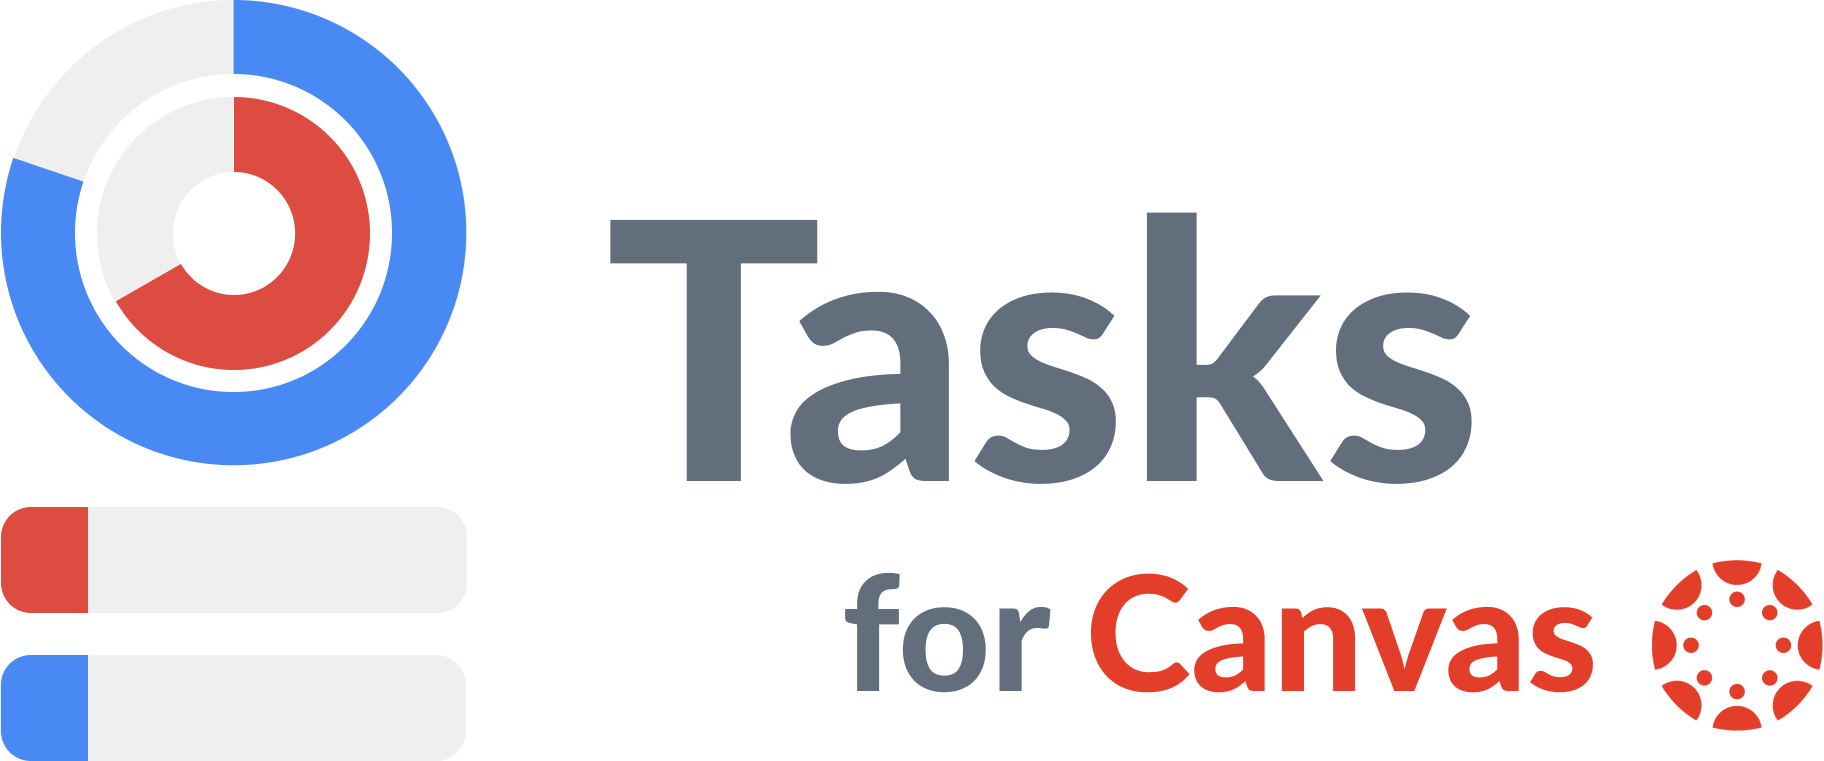 Tasks for Canvas logo